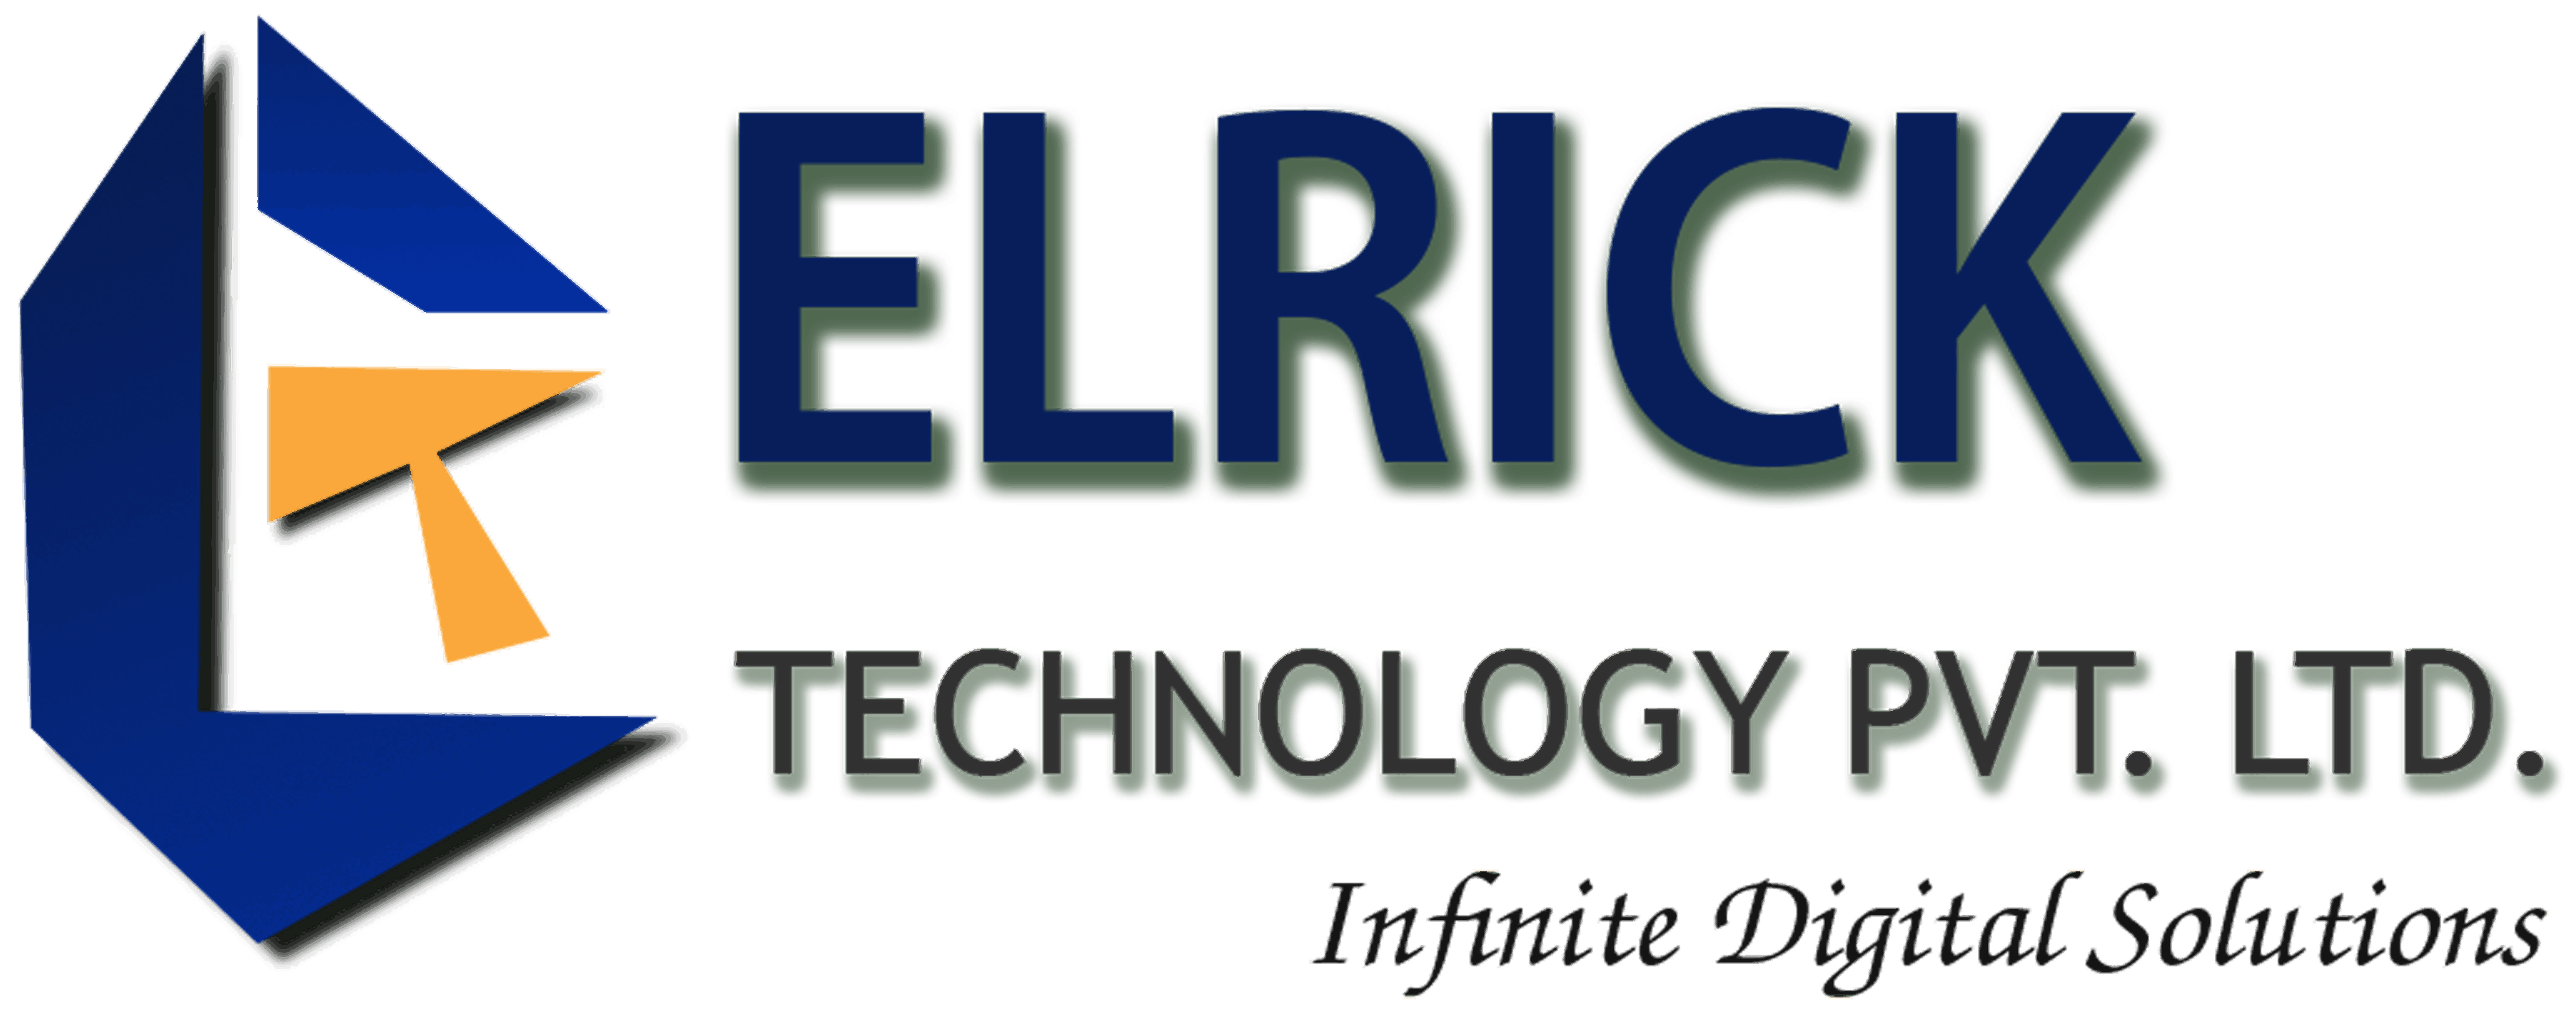 Elrick Technology